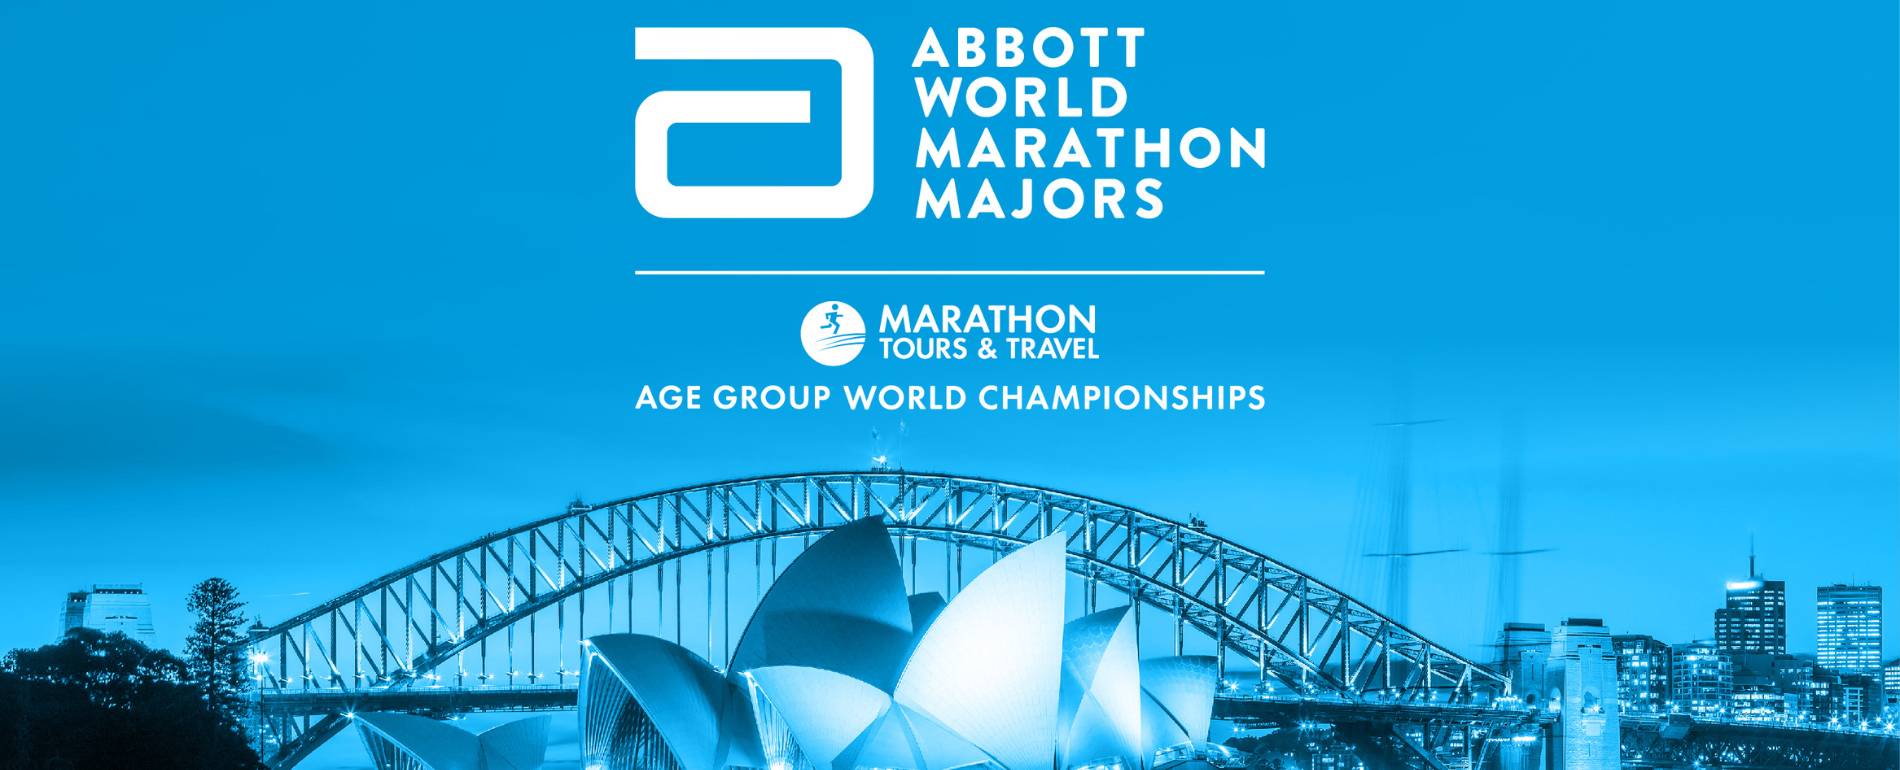 Abbott World Marathon Majors Marathon Tours & Travel Age Group World Championships